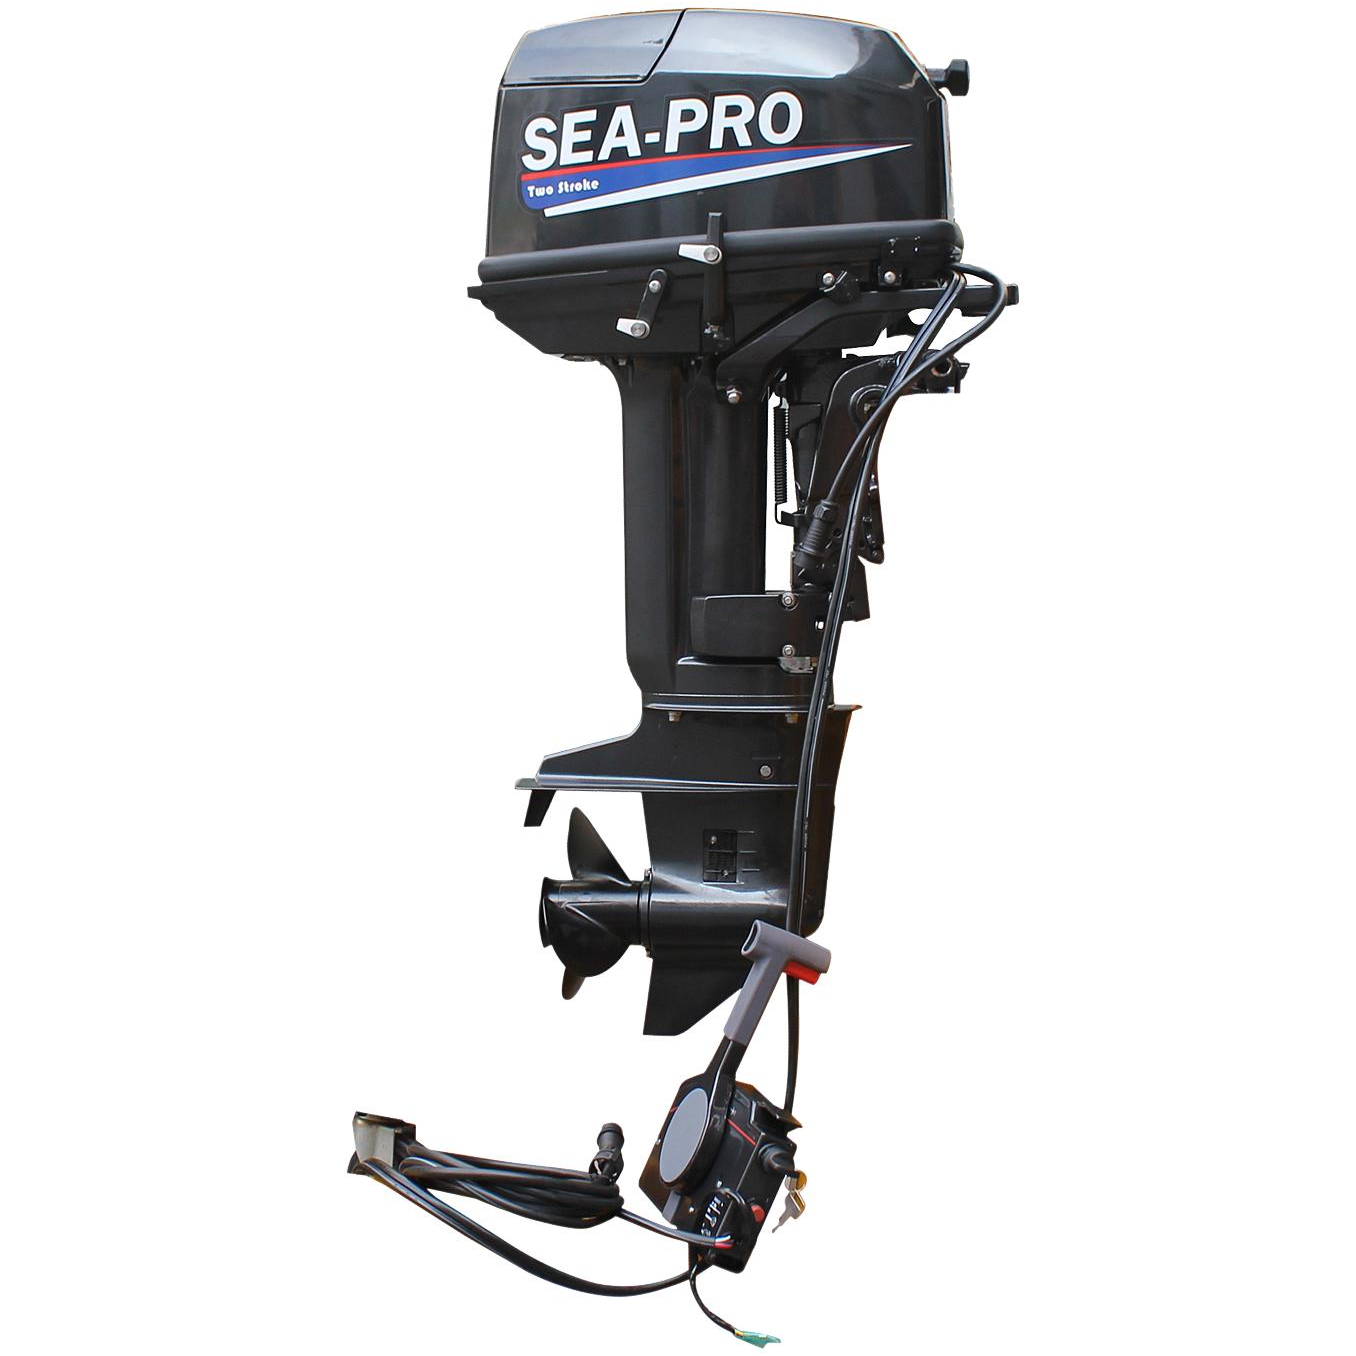 Мотор лодочный 30 новый. Лодочный мотор Sea-Pro t 30 s. Лодочный мотор Sea-Pro t 30se. Sea-Pro t 30s&e. Мотор Sea Pro 30 s&e.